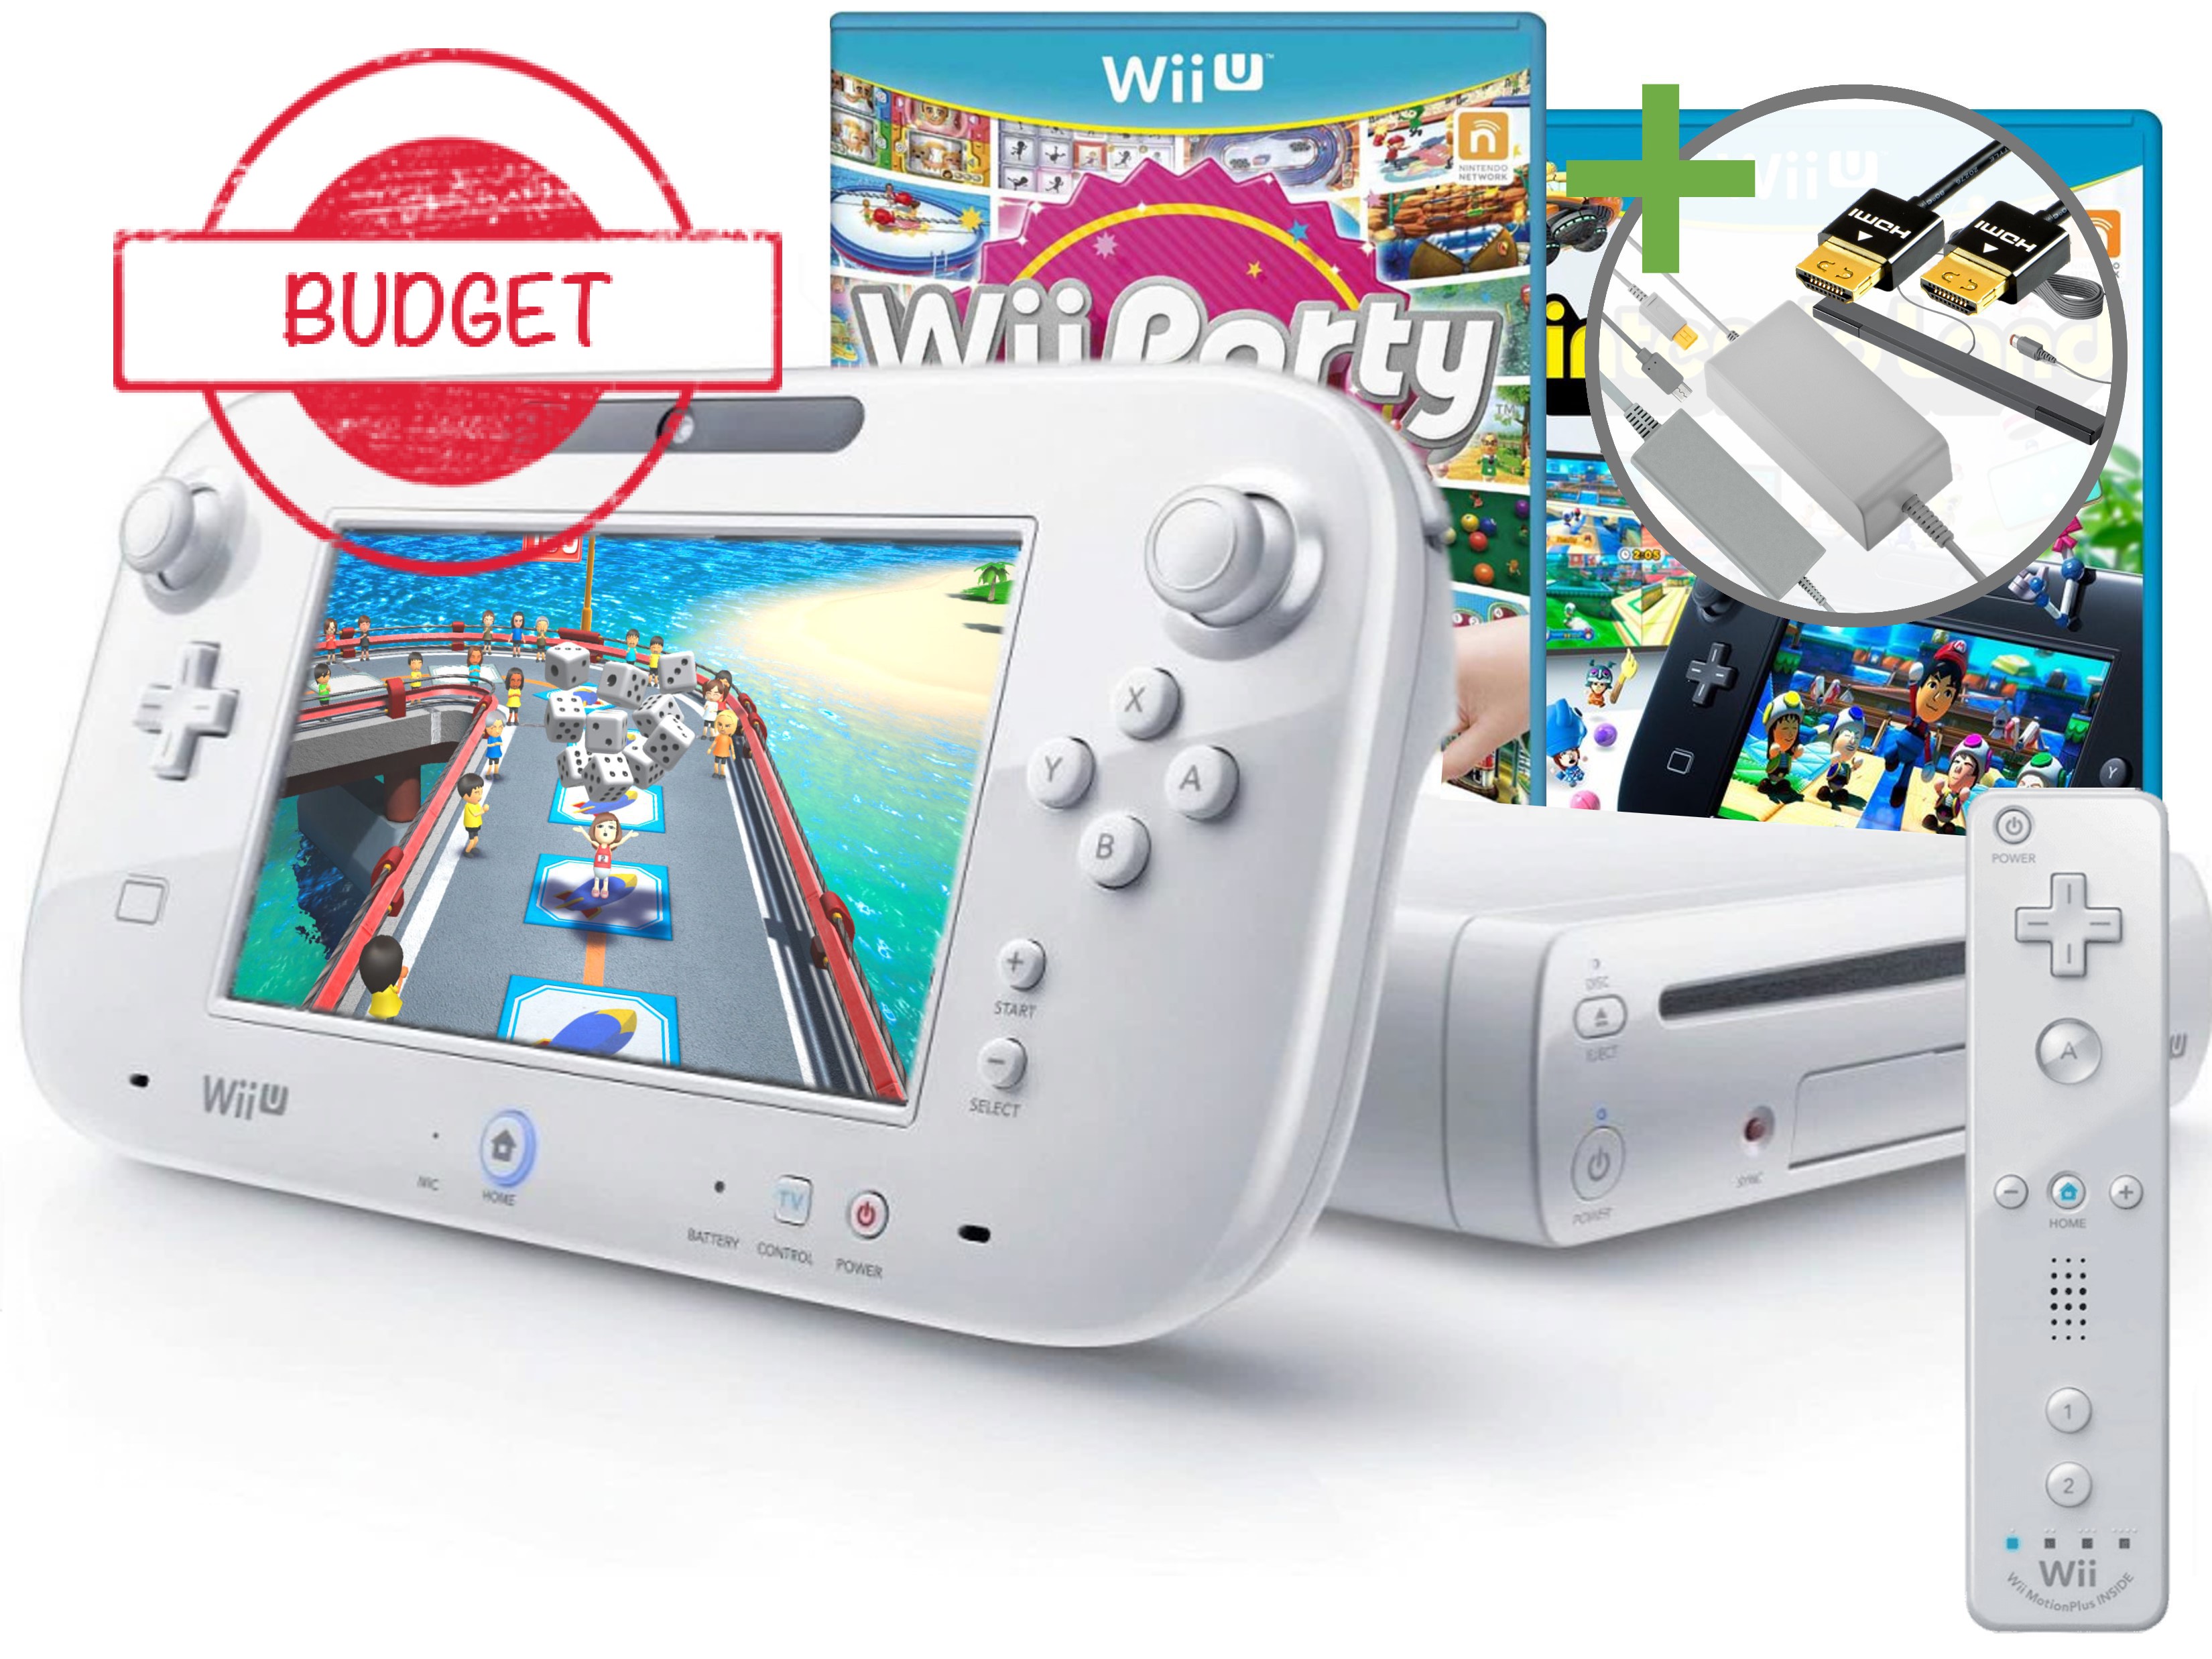 Nintendo Wii U Starter Pack - Wii Party U Edition - Budget Kopen | Wii U Hardware